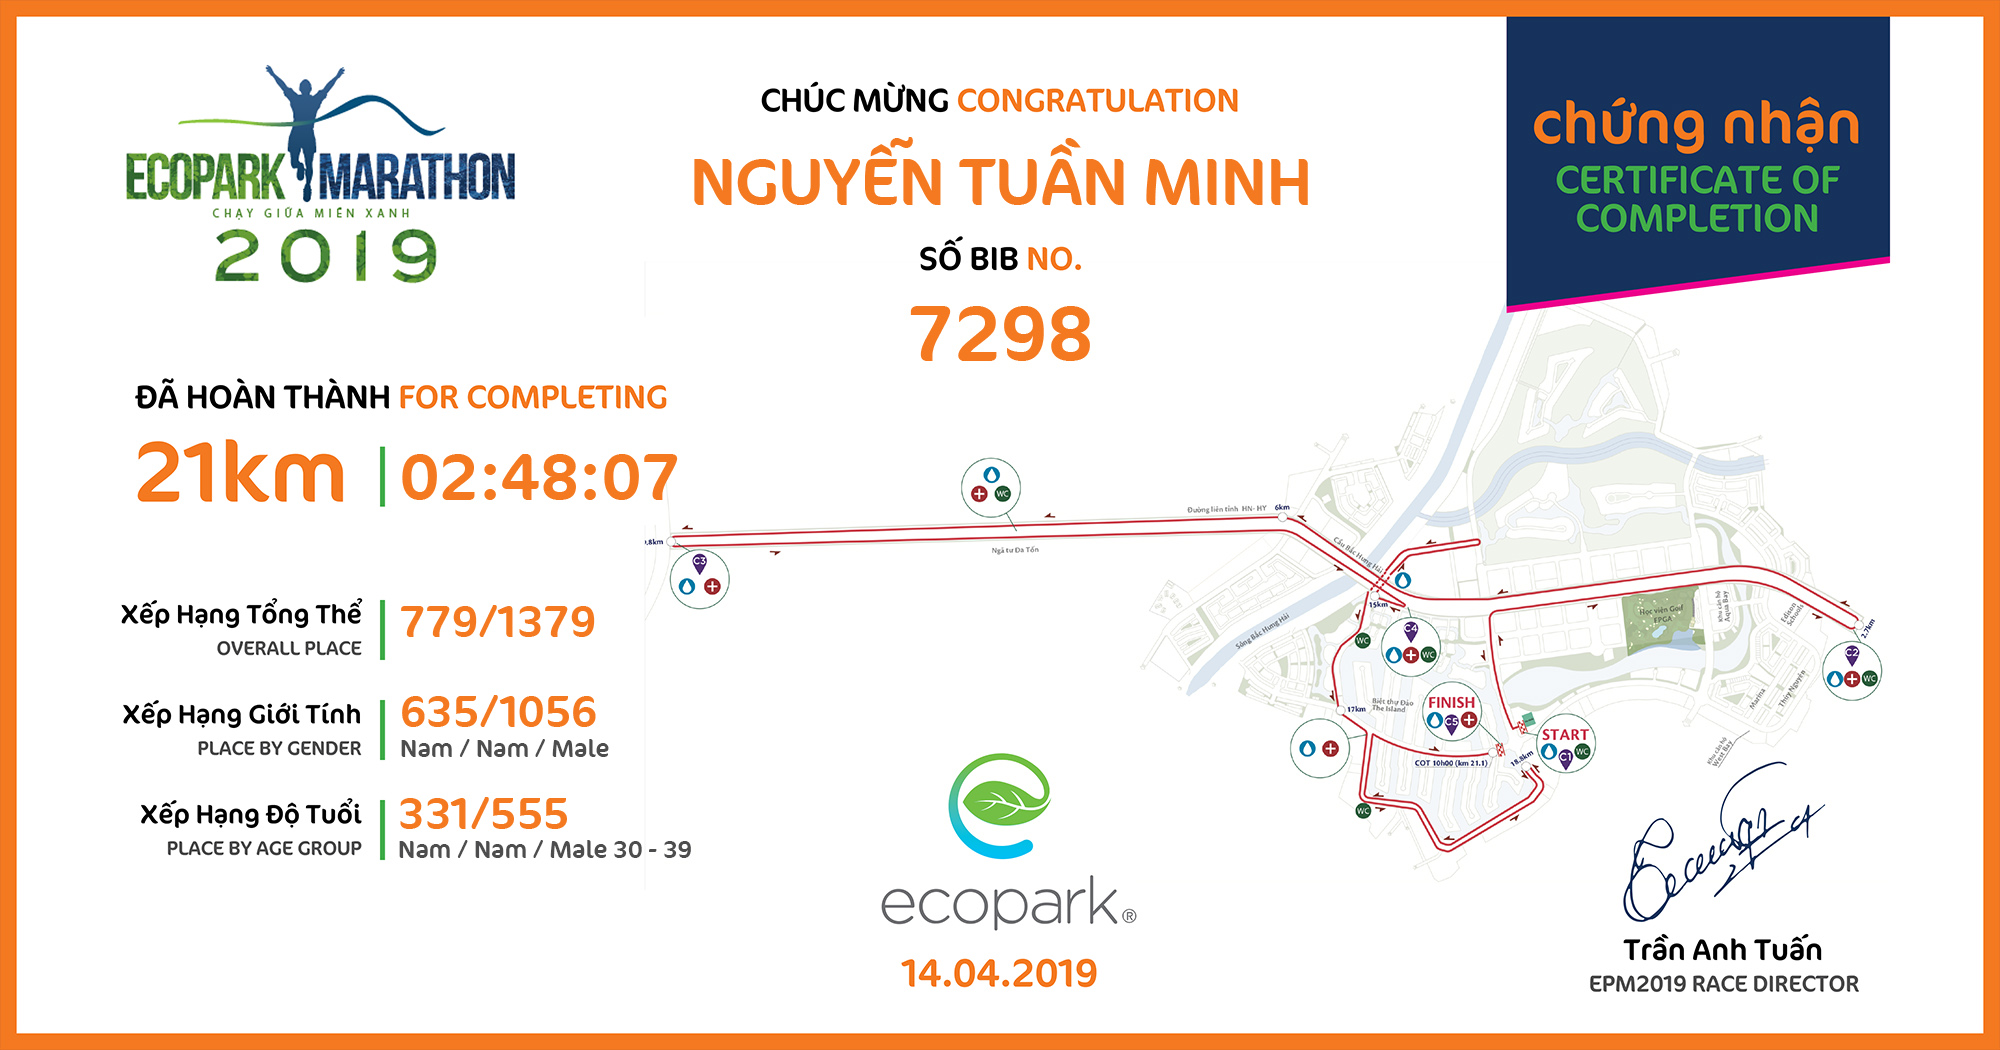 7298 - Nguyễn Tuần Minh